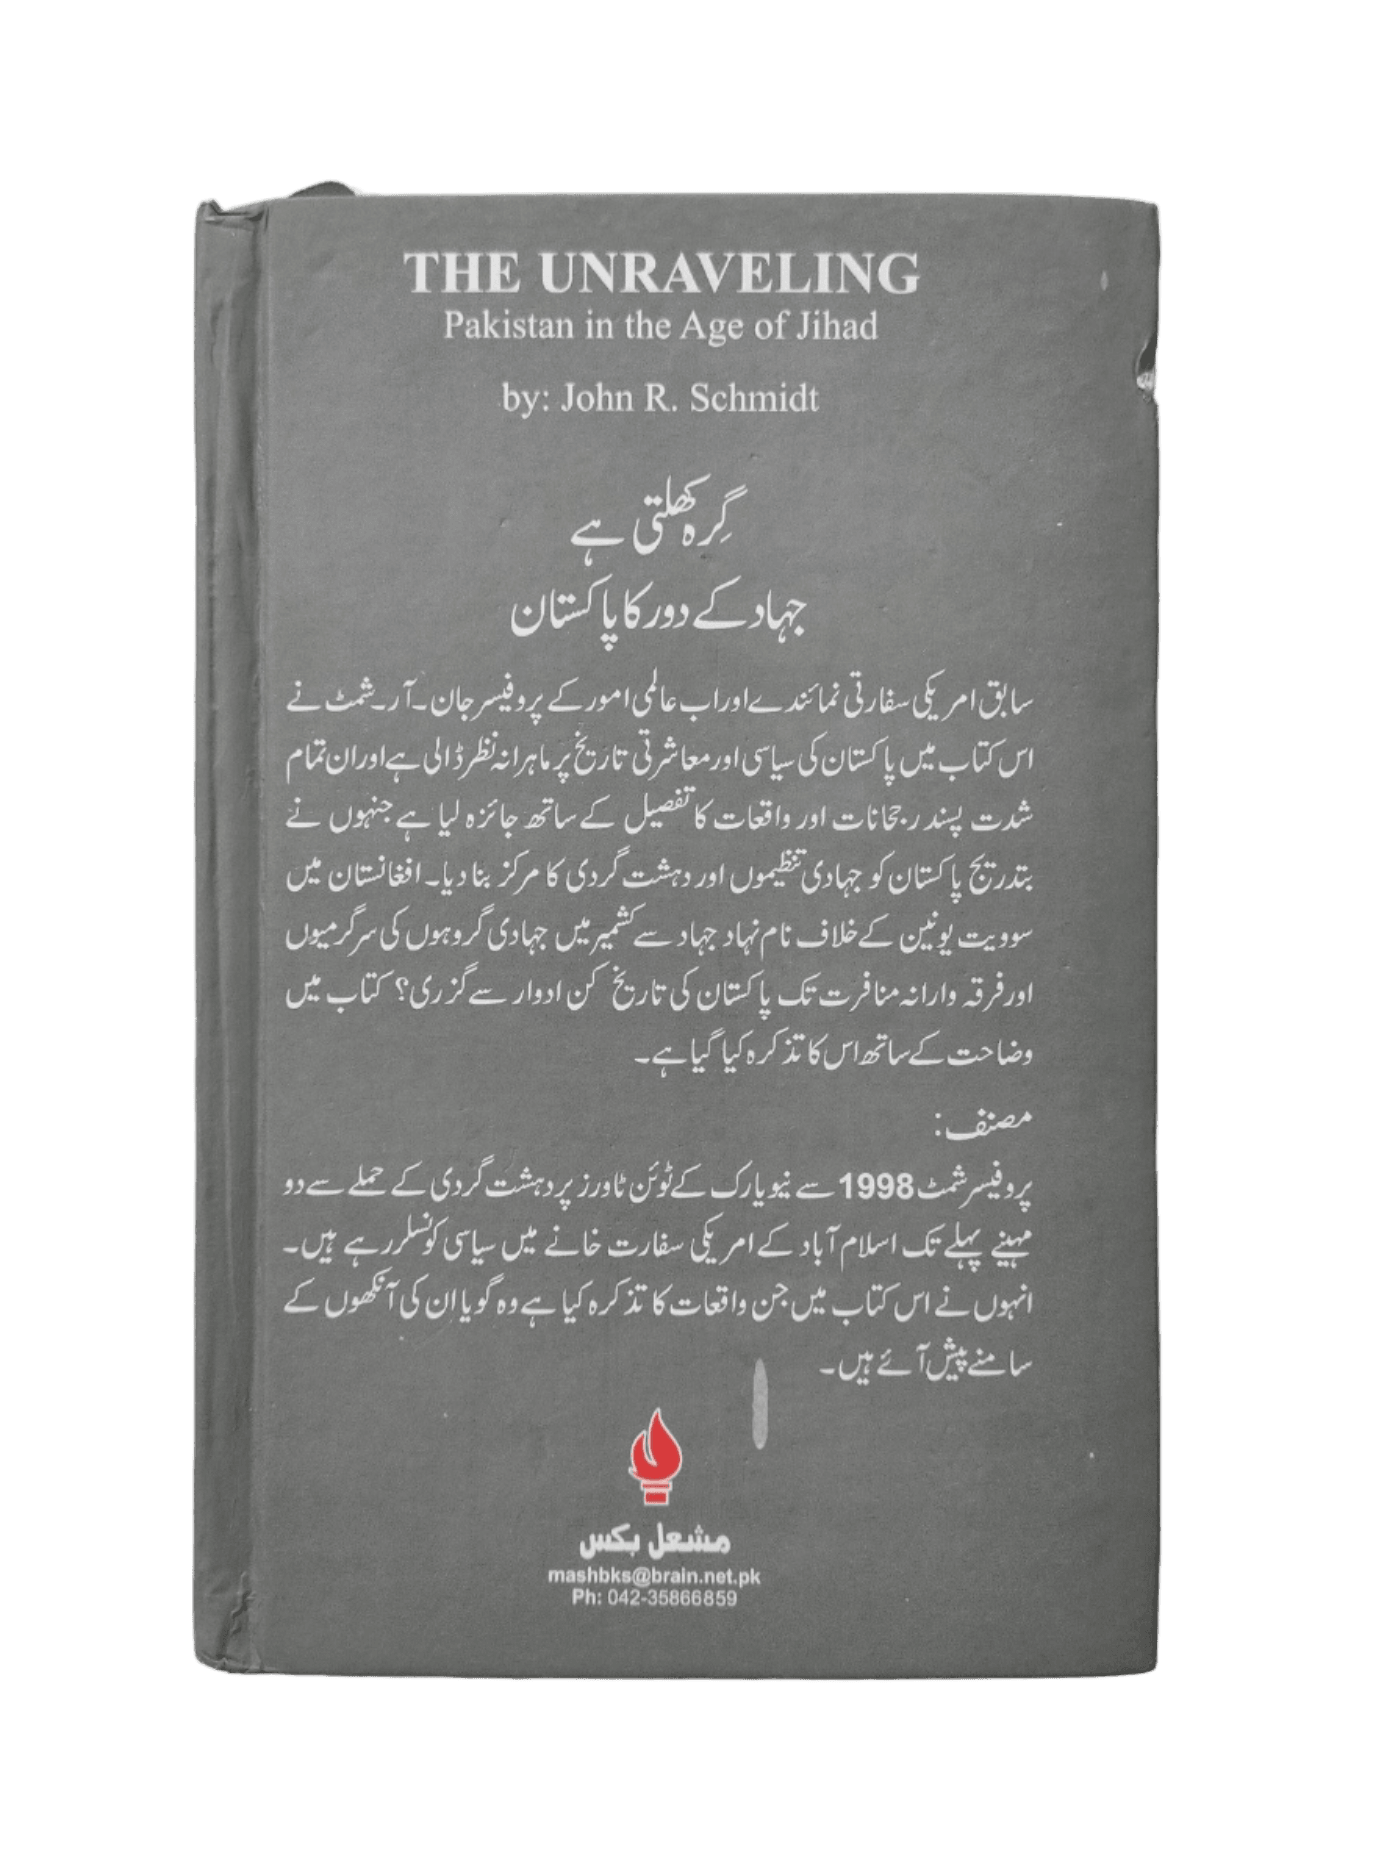 Girah Khulti Hai - Jihad ke Daur ka Pakistan (The Unraveling - Pakistan In The Age of Jihad) - KHAJISTAN™